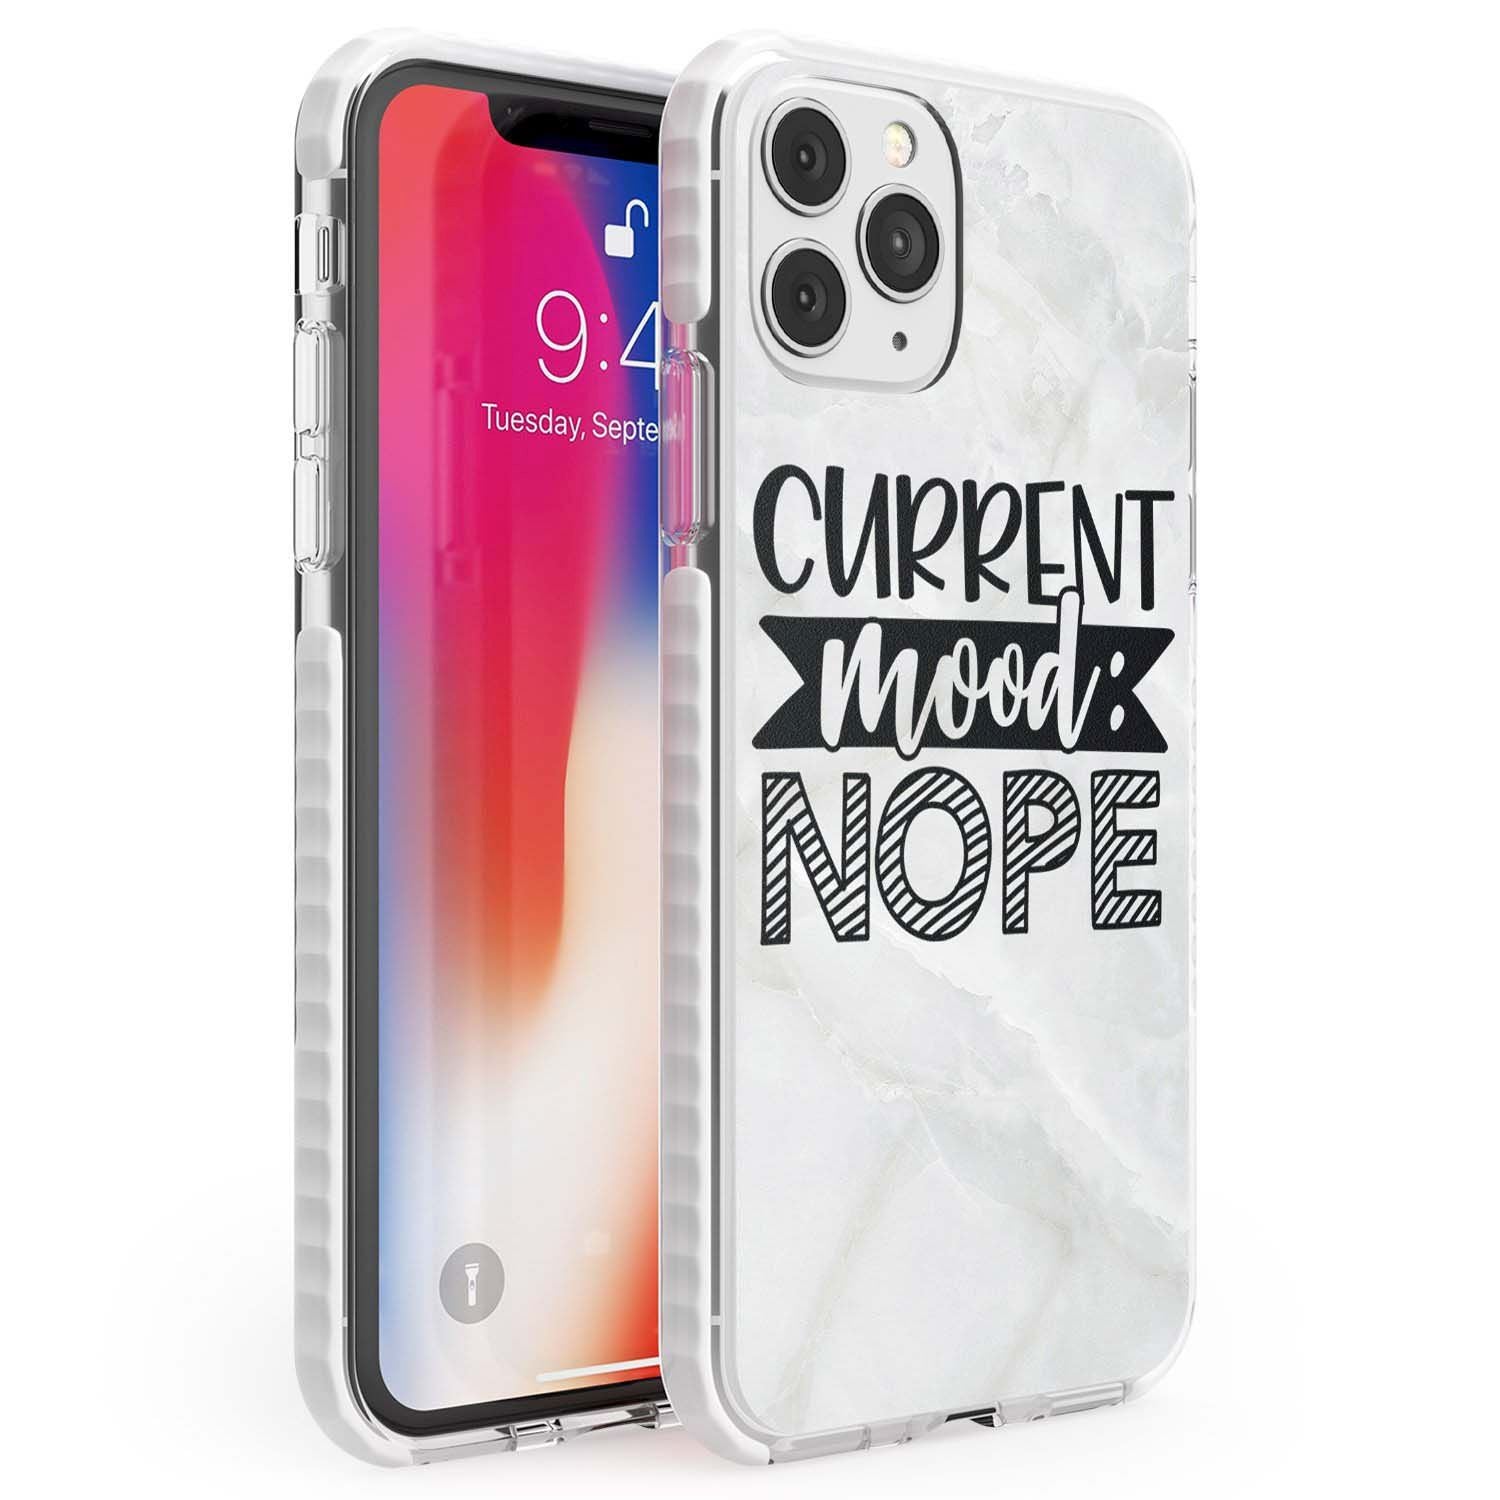 Current Mood NOPE Phone Case iPhone 11 Pro Max / Impact Case,iPhone 11 Pro / Impact Case,iPhone 12 Pro / Impact Case,iPhone 12 Pro Max / Impact Case Blanc Space